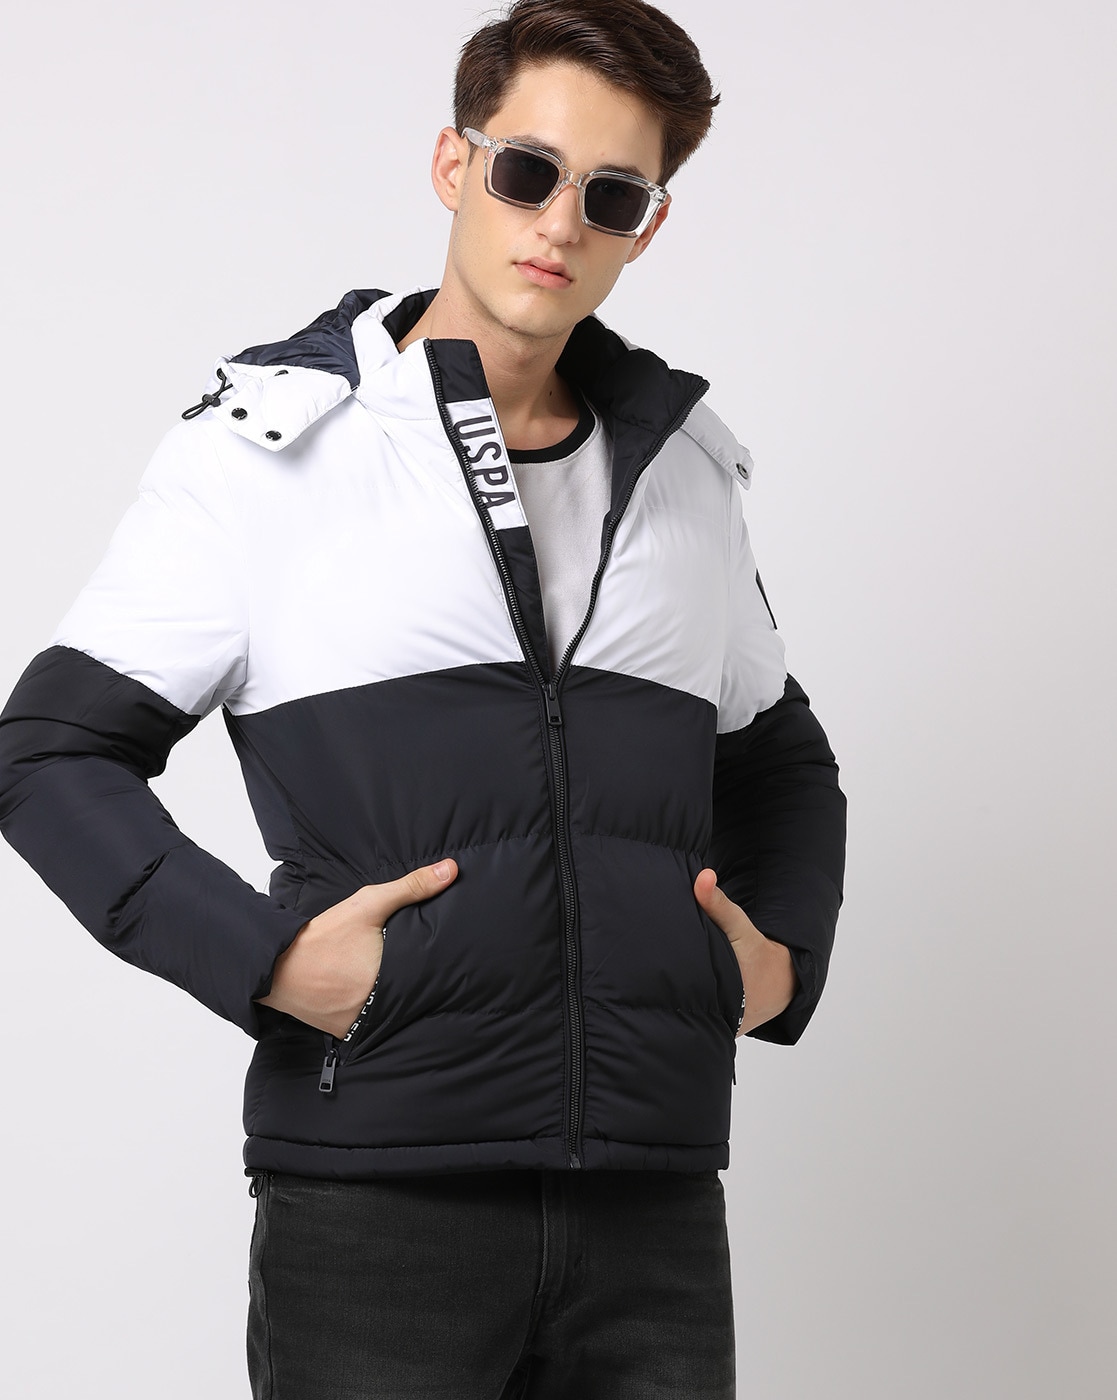 U.S. Polo Assn. Boys Colorblock Hooded Puffer Jacket, Sizes 8-20 -  Walmart.com